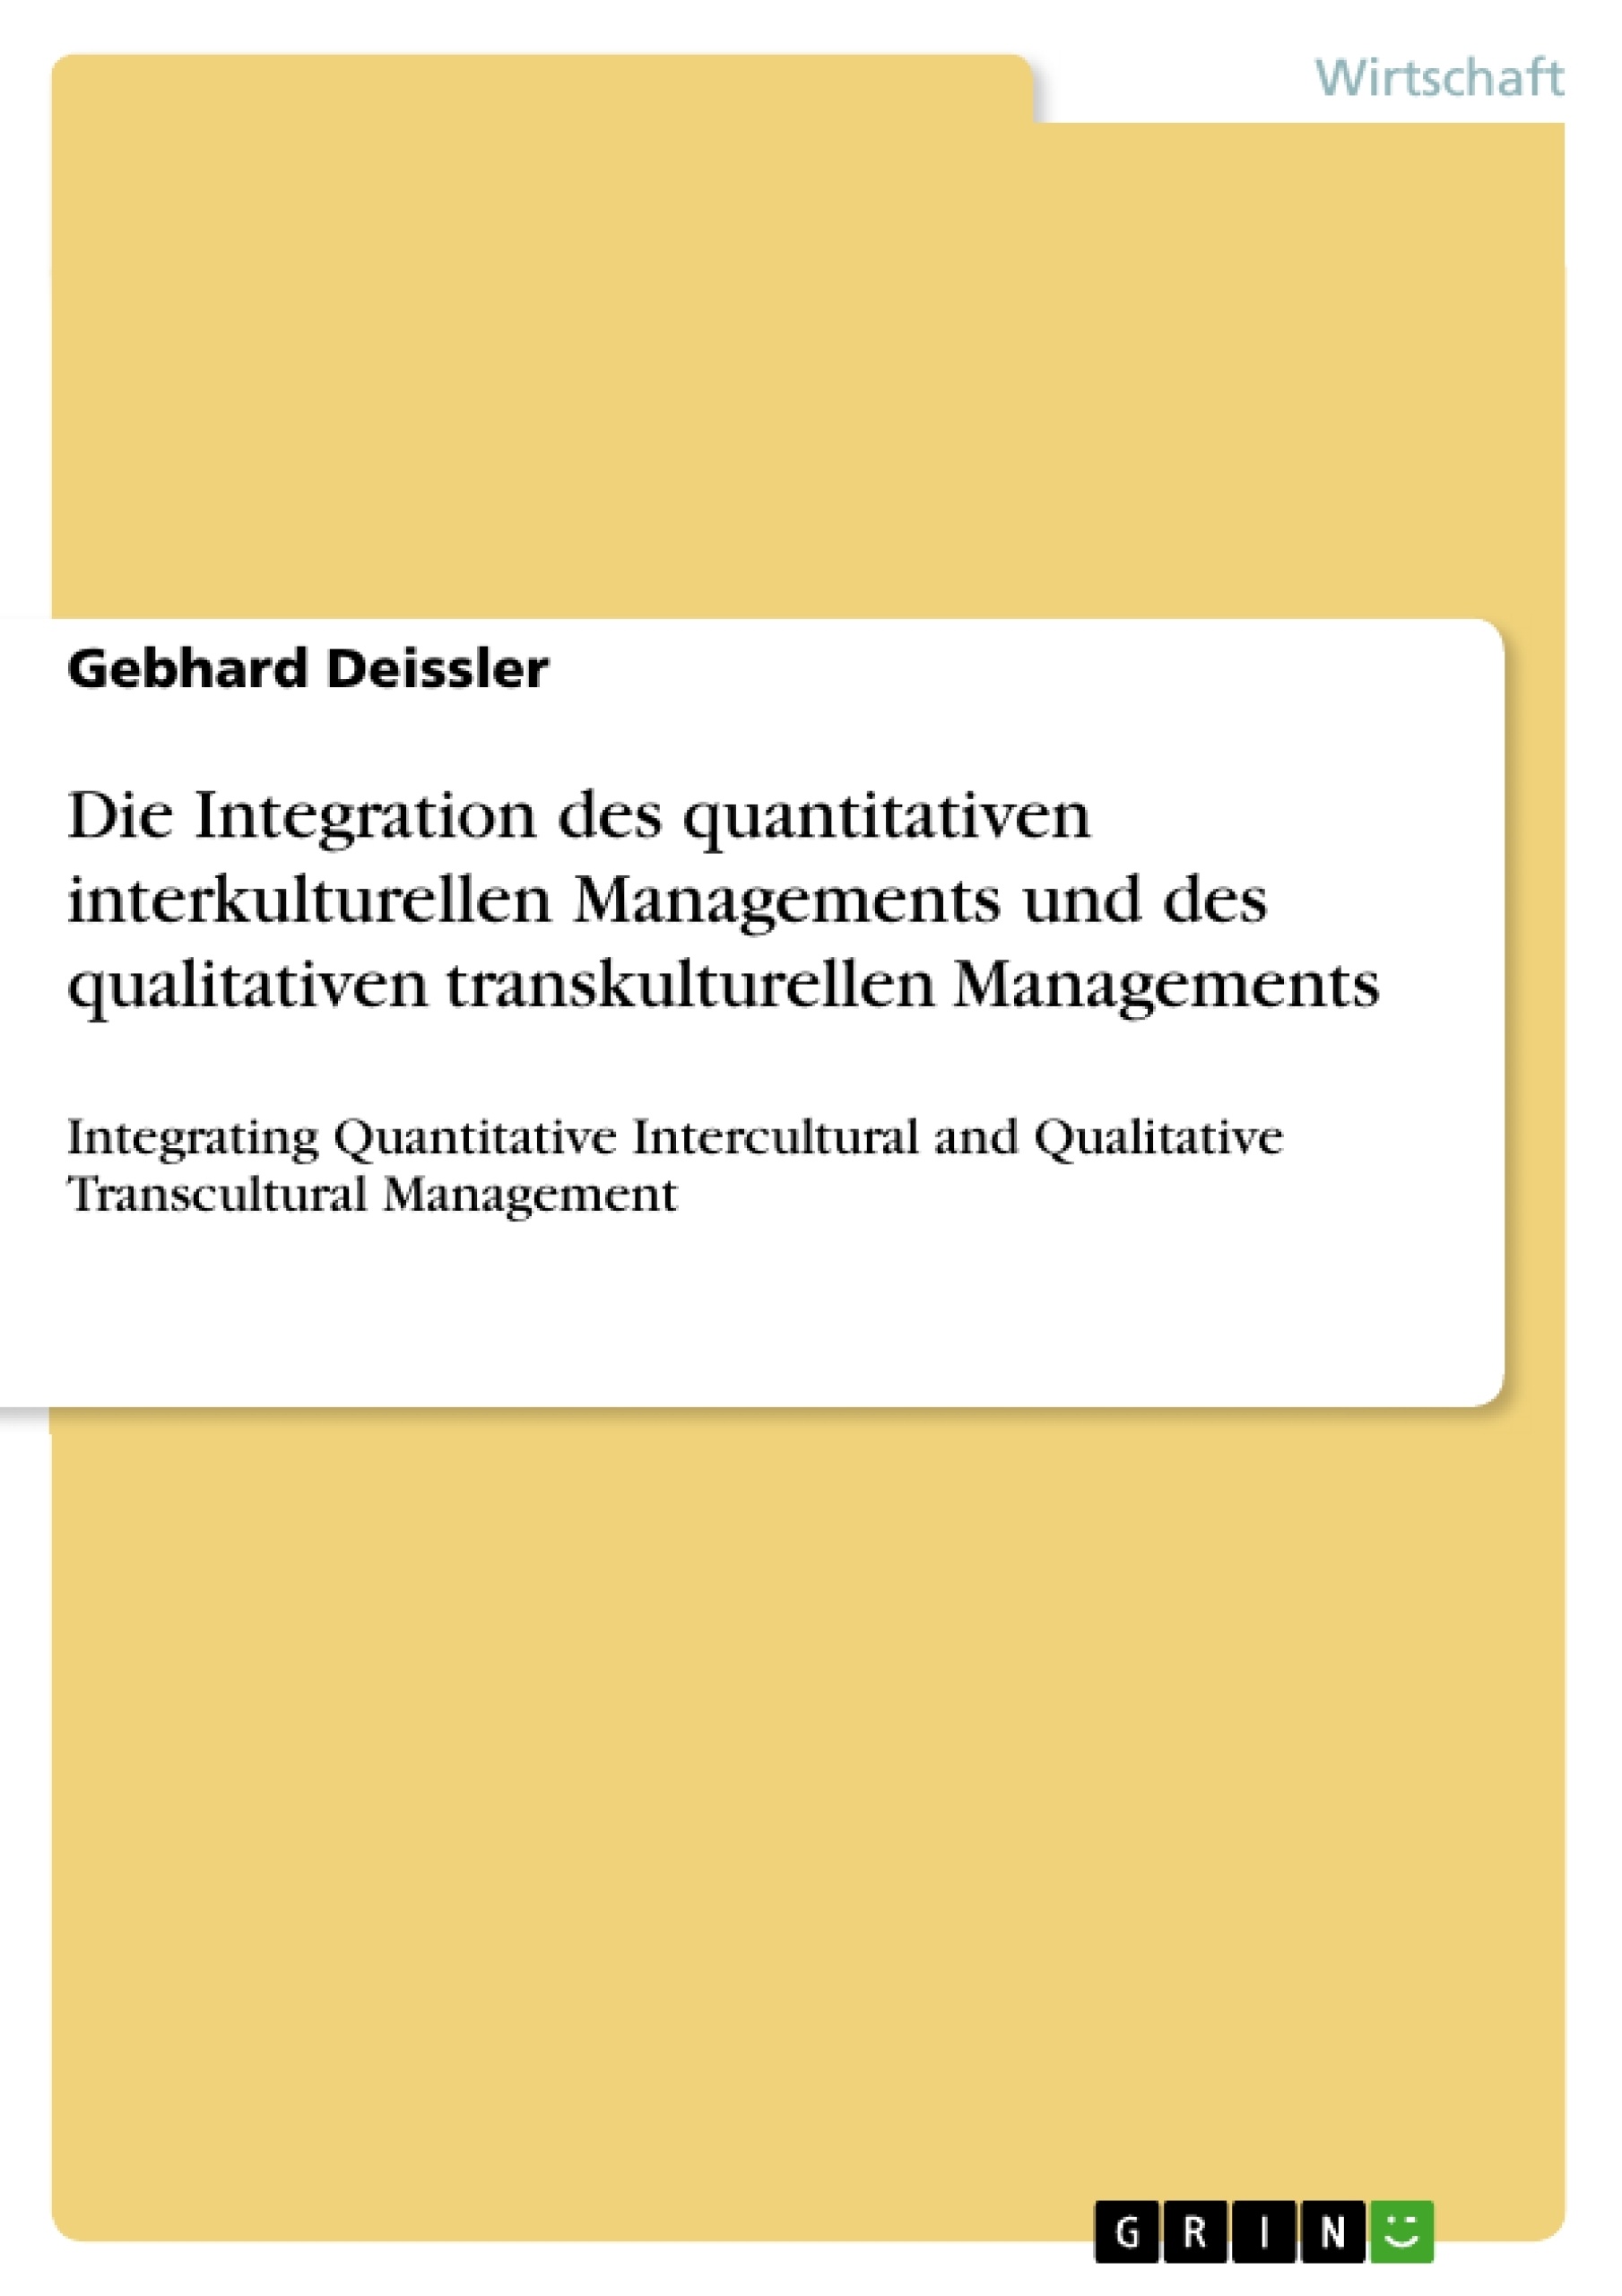 Title: Die Integration des quantitativen interkulturellen Managements und des qualitativen transkulturellen Managements